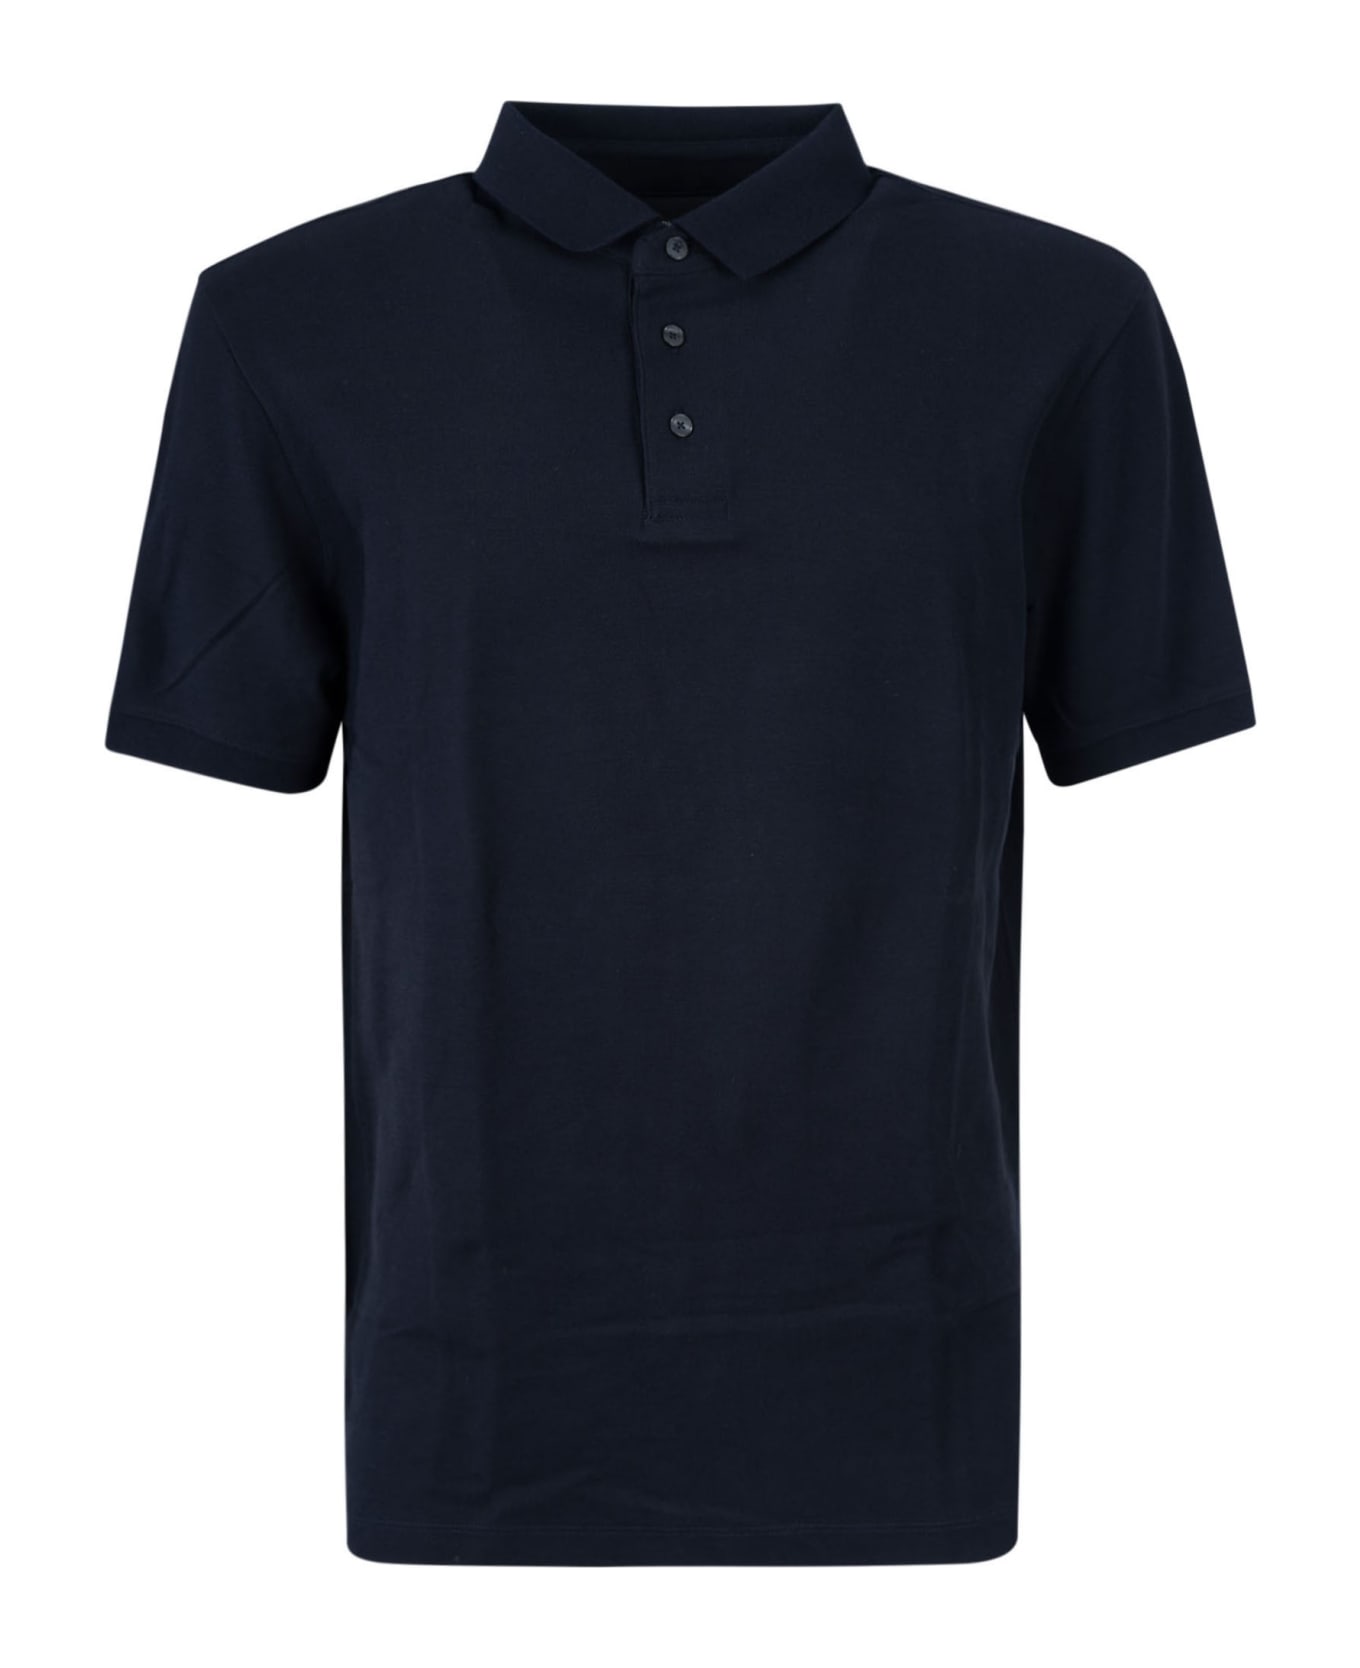 Emporio Armani Buttoned Polo Shirt - Stend Navy シャツ